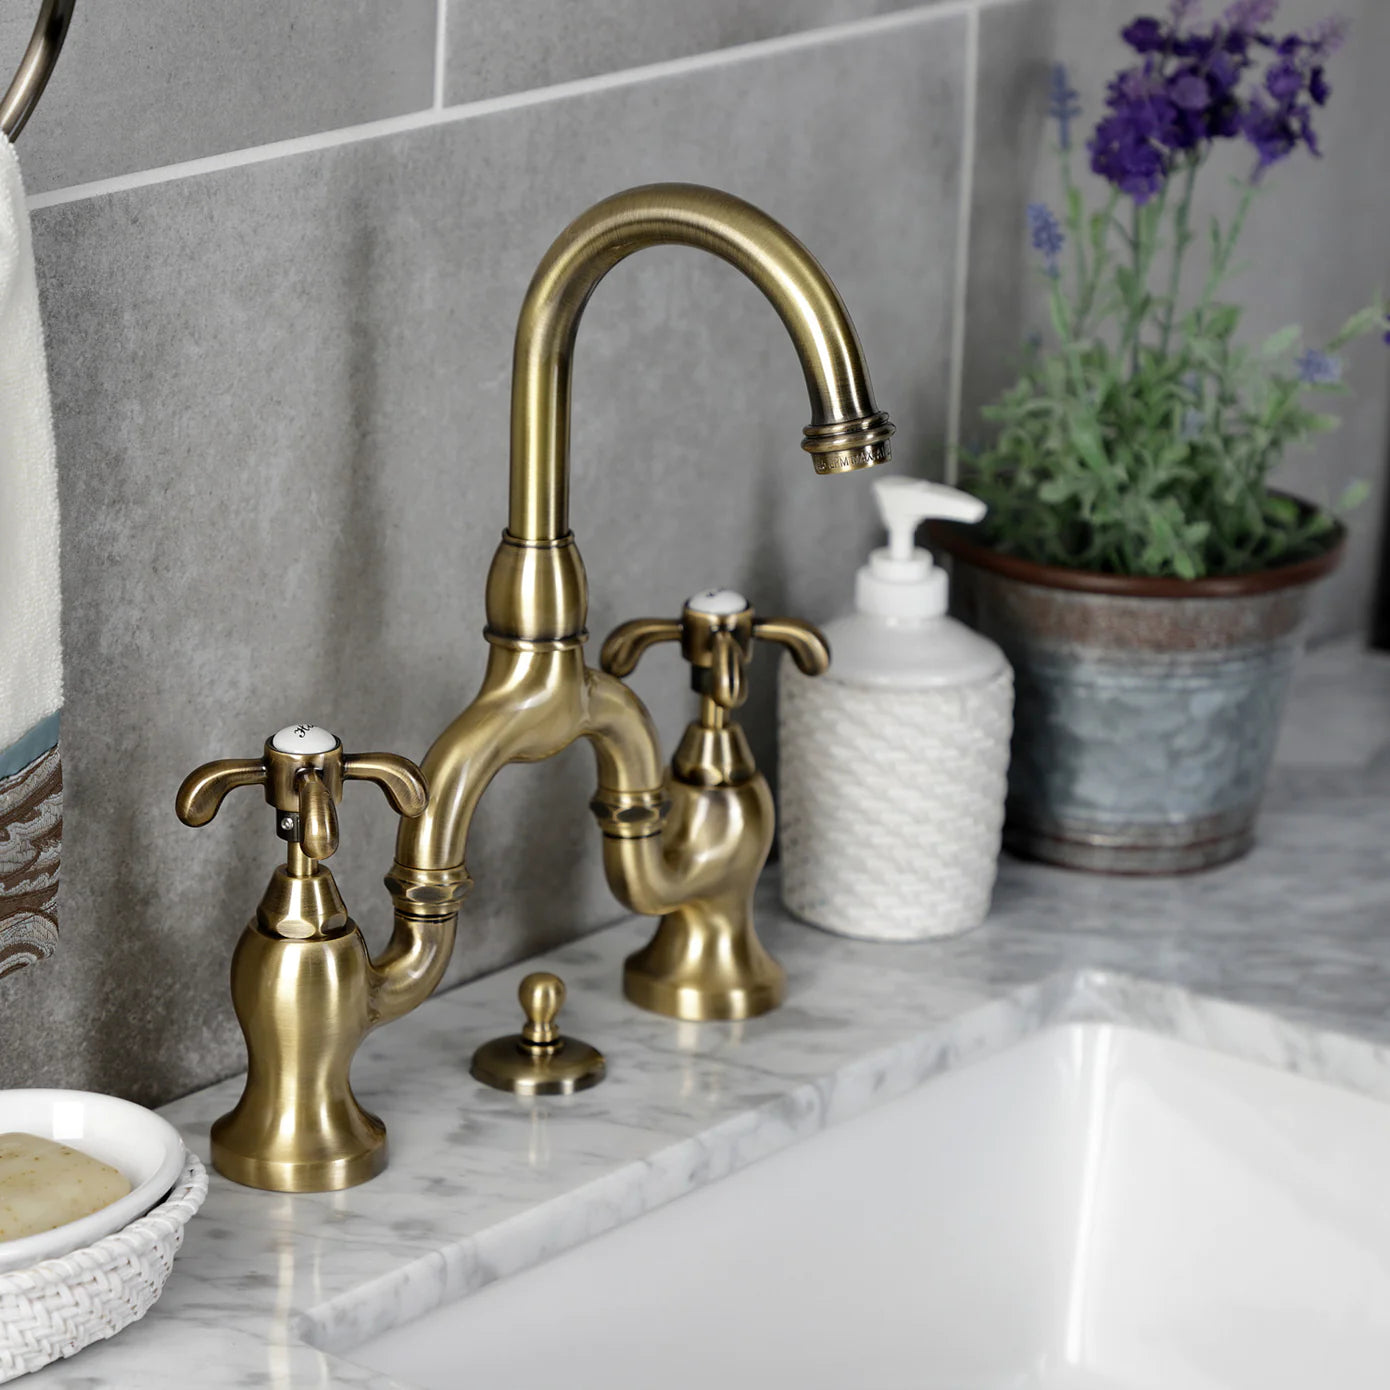 European Style Bathroom Faucets – Rustic Sinks